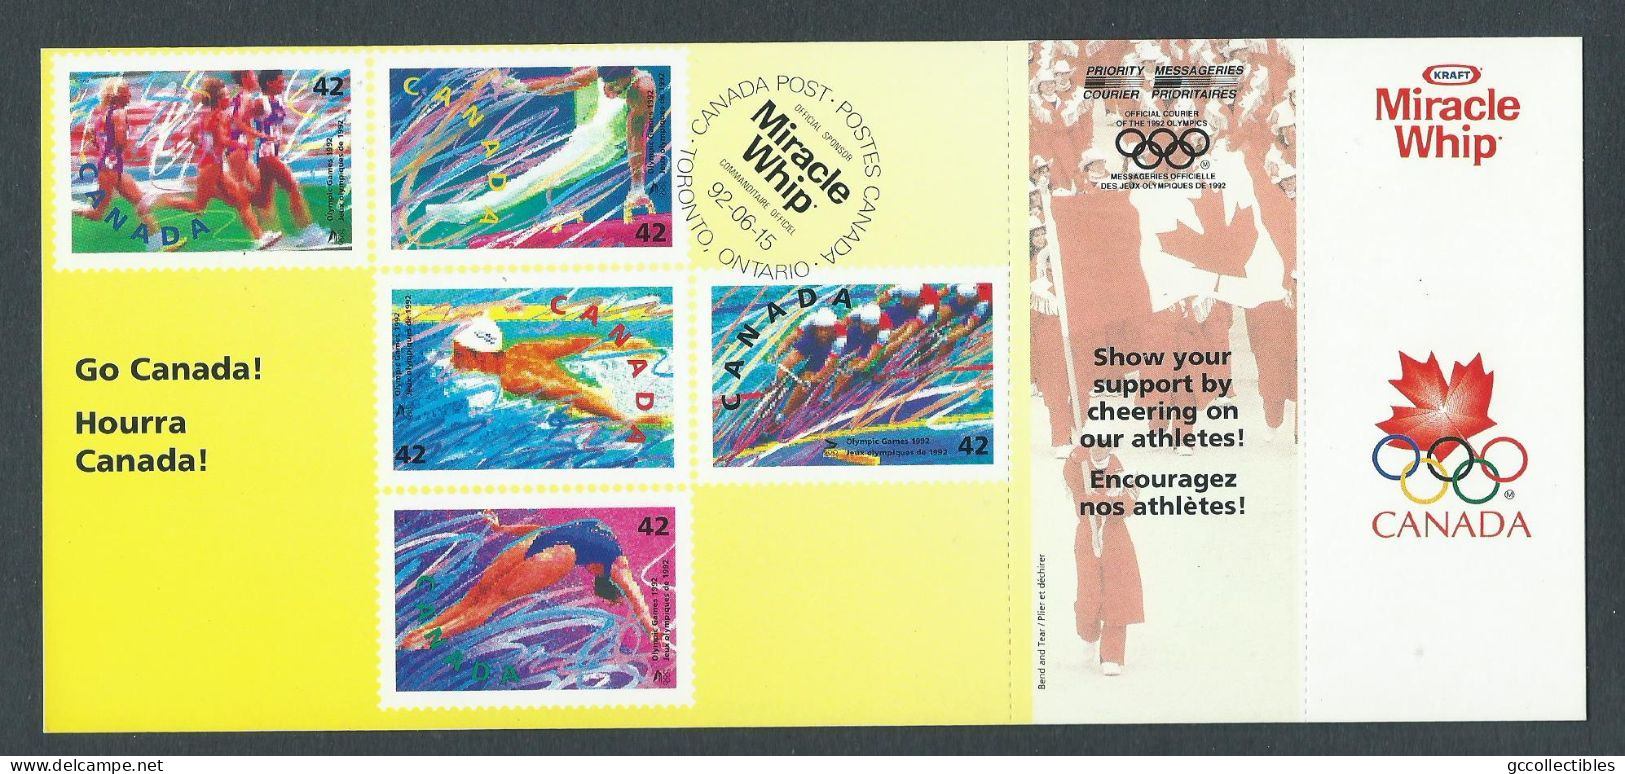 Canada-Post Miracle Whip Post Card Uncirculated - Summer Olympics 1992 - Cartes Illustrées Officielles